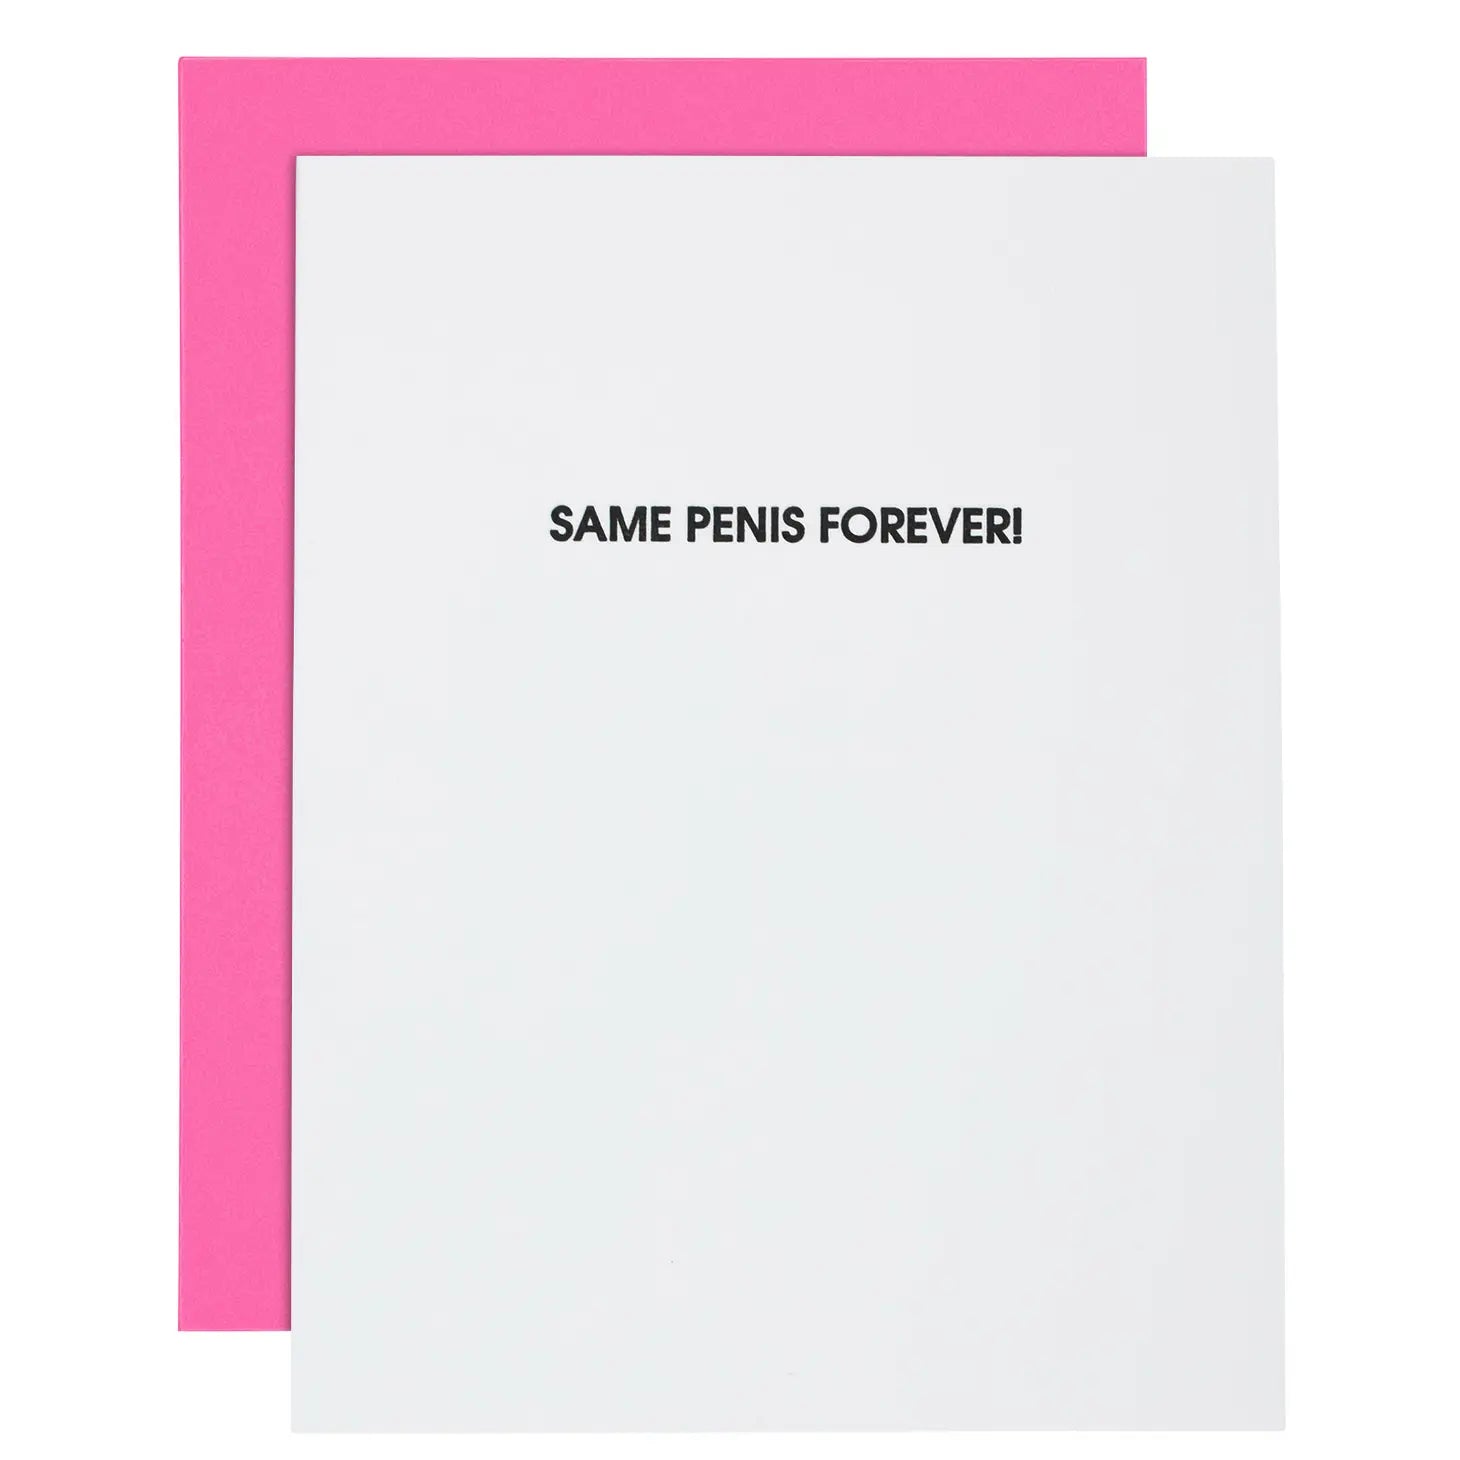 Same Penis Forever! Greeting Card